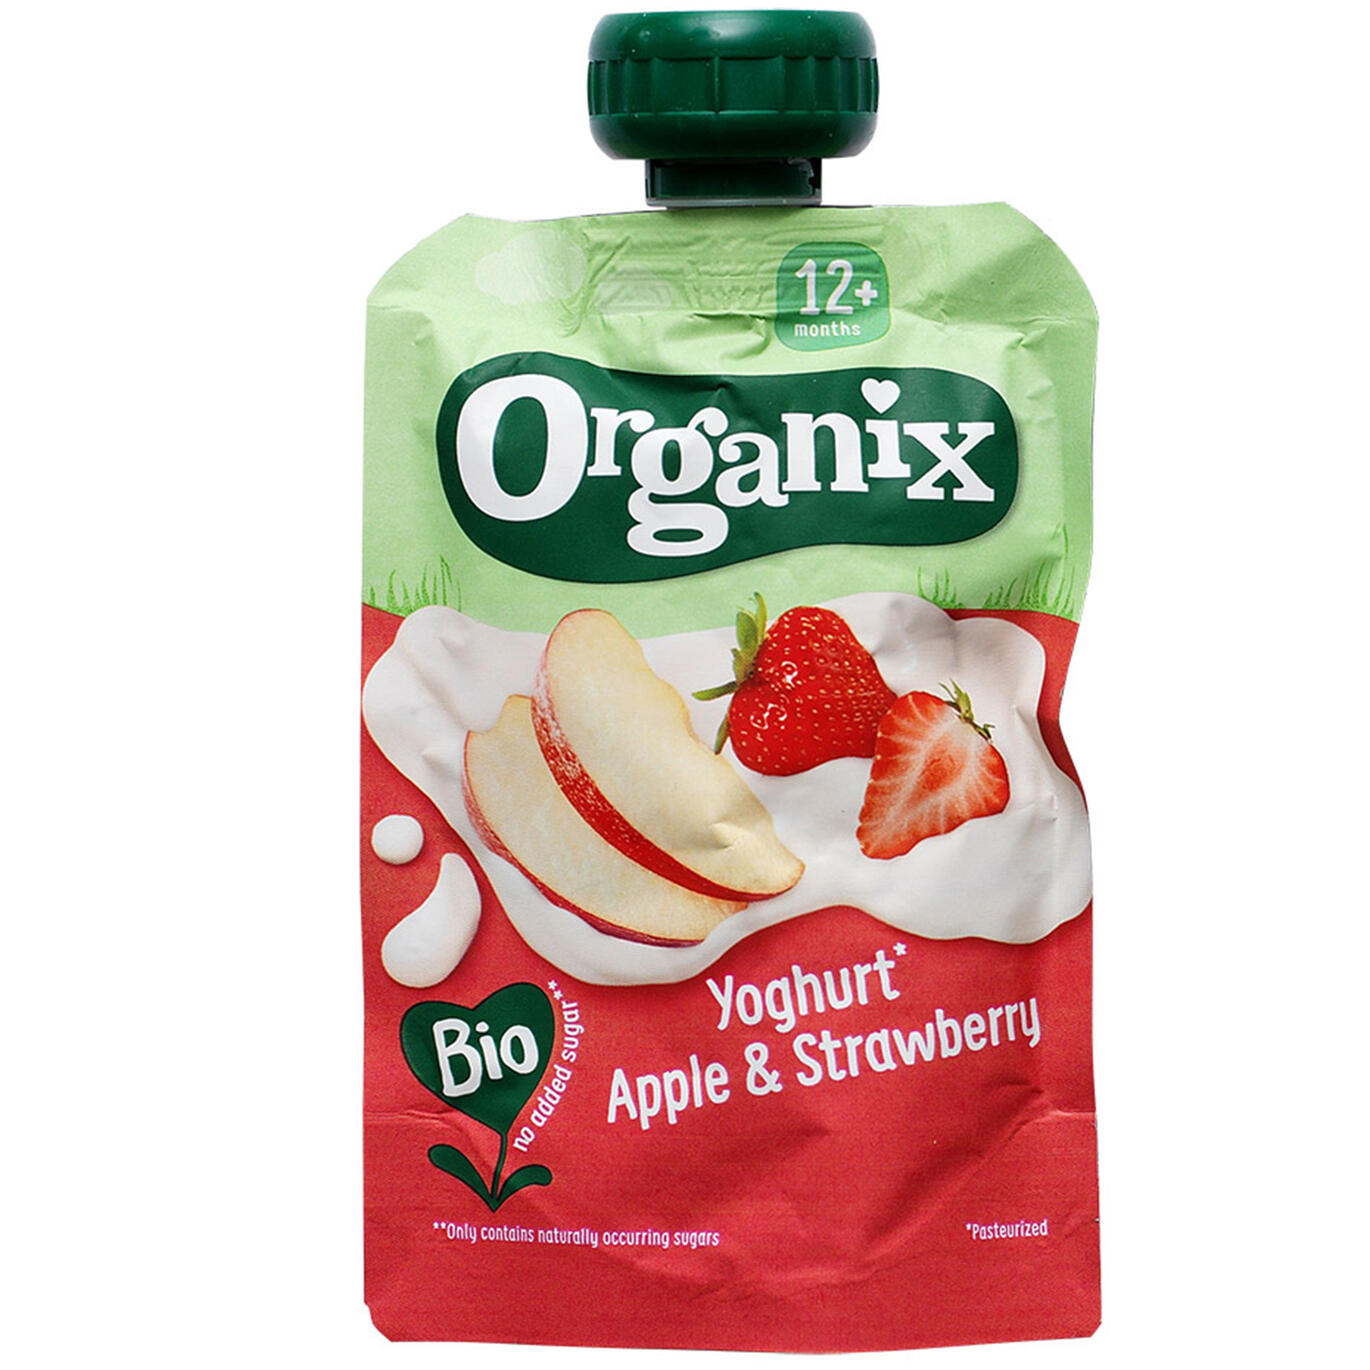 Yoghurt, Apple & Strawberry Organix